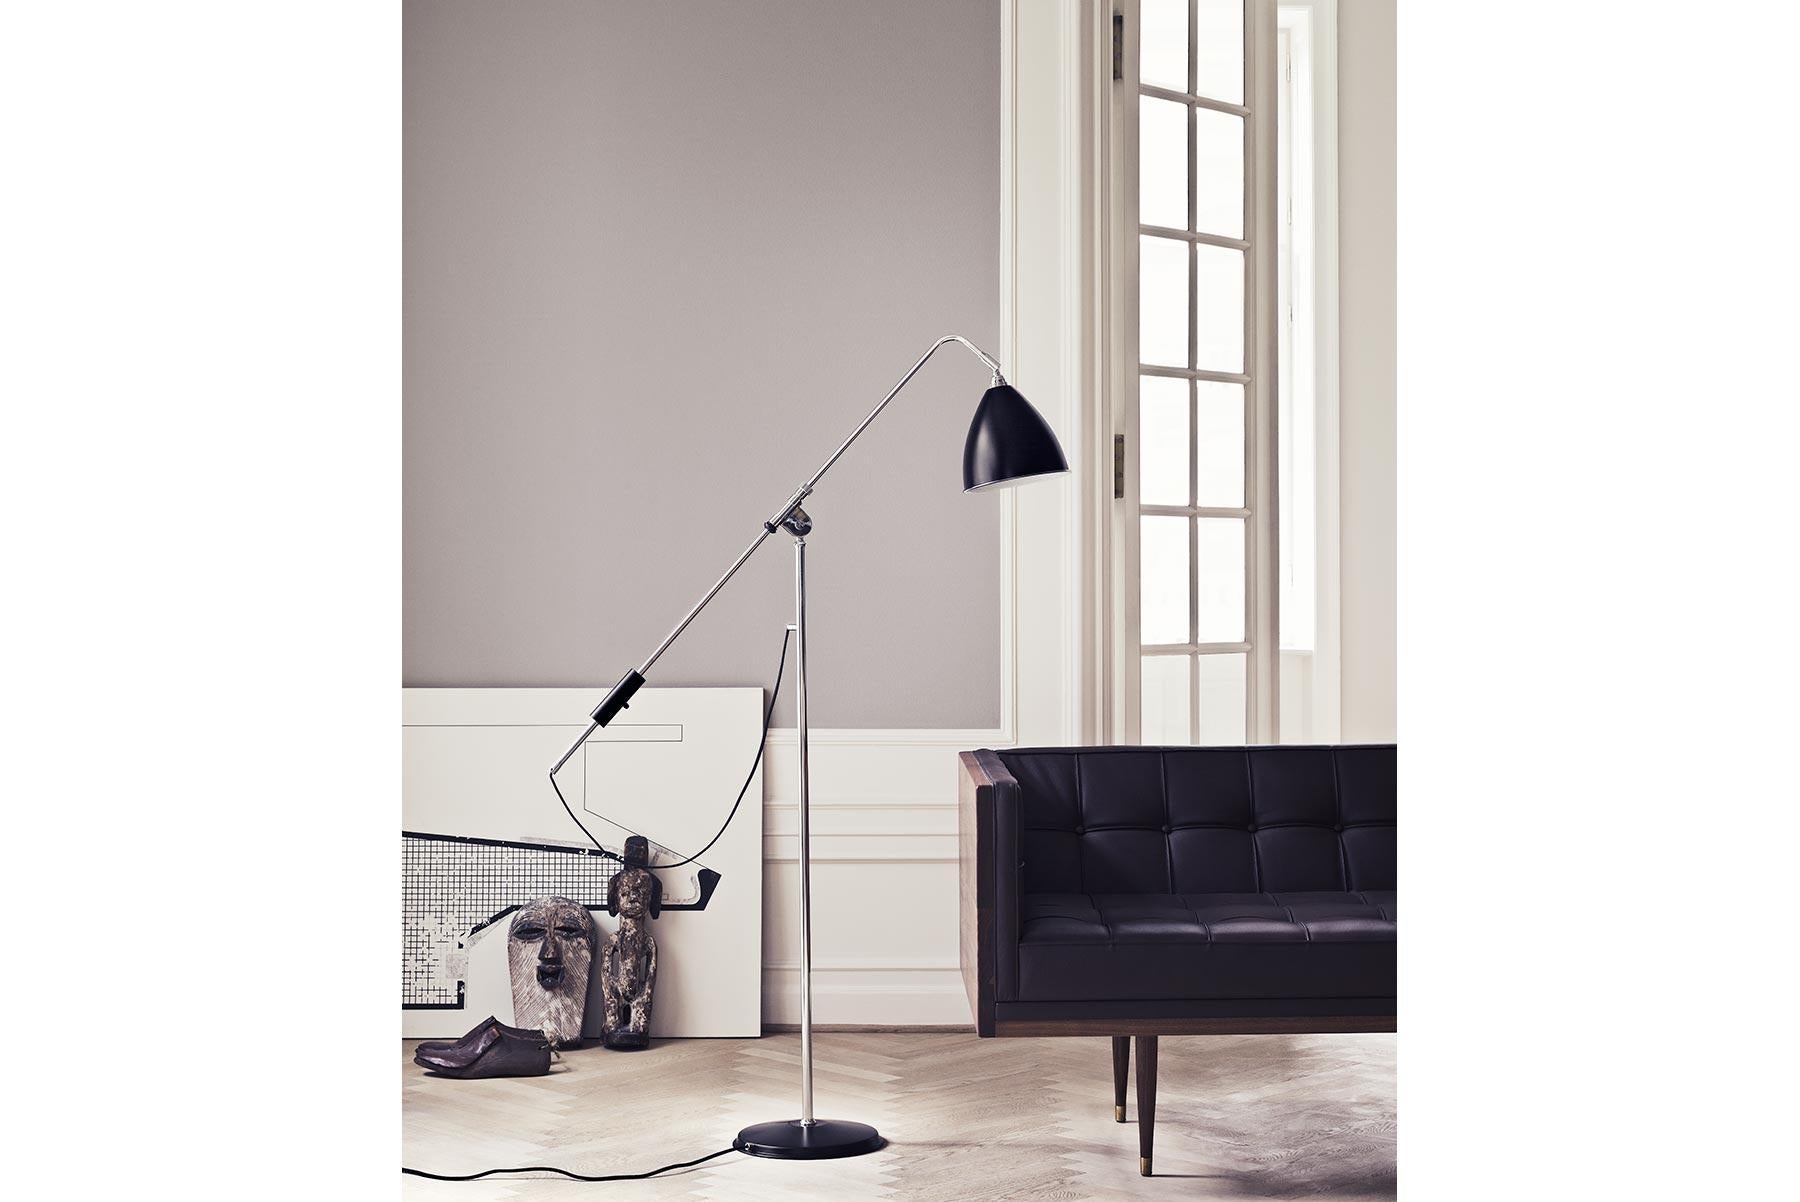 Bauhaus Robert Dudley Bestlite BL4 Floor Lamp, Chrome and Black